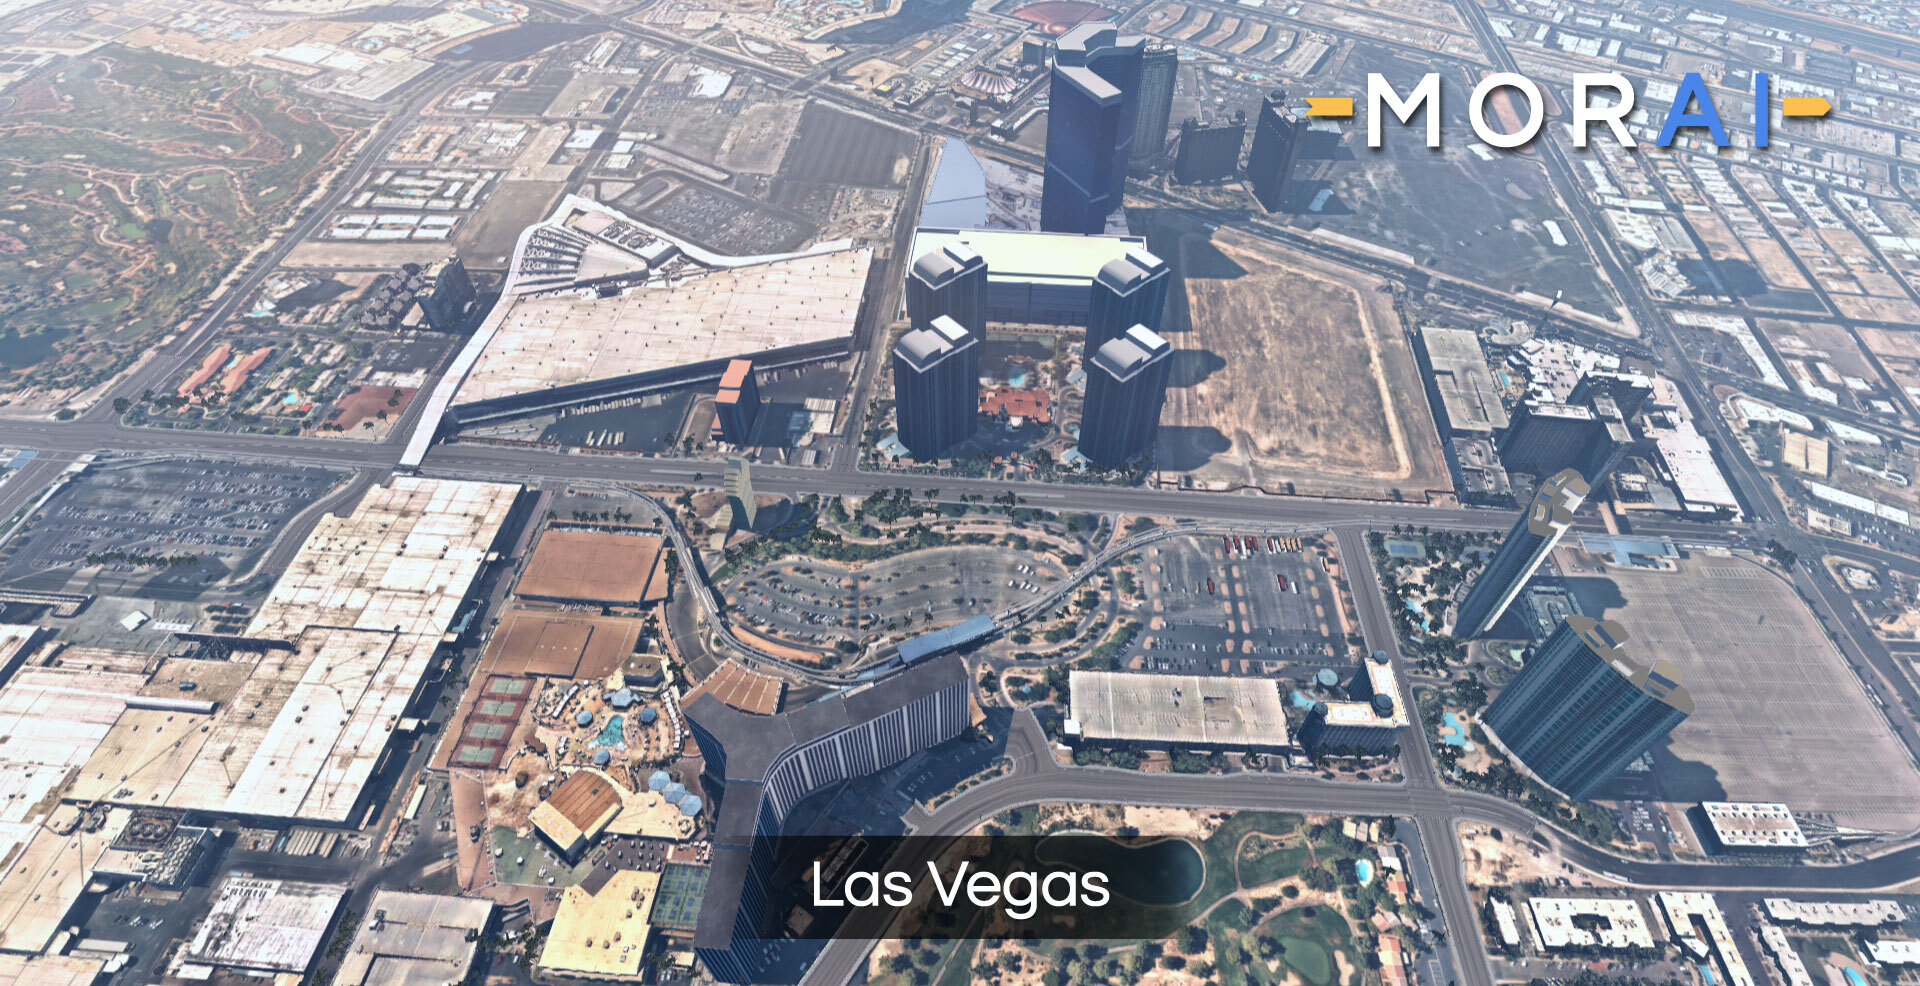 Digital Twin Environment developed by Morai SIM - Las Vegas, NV